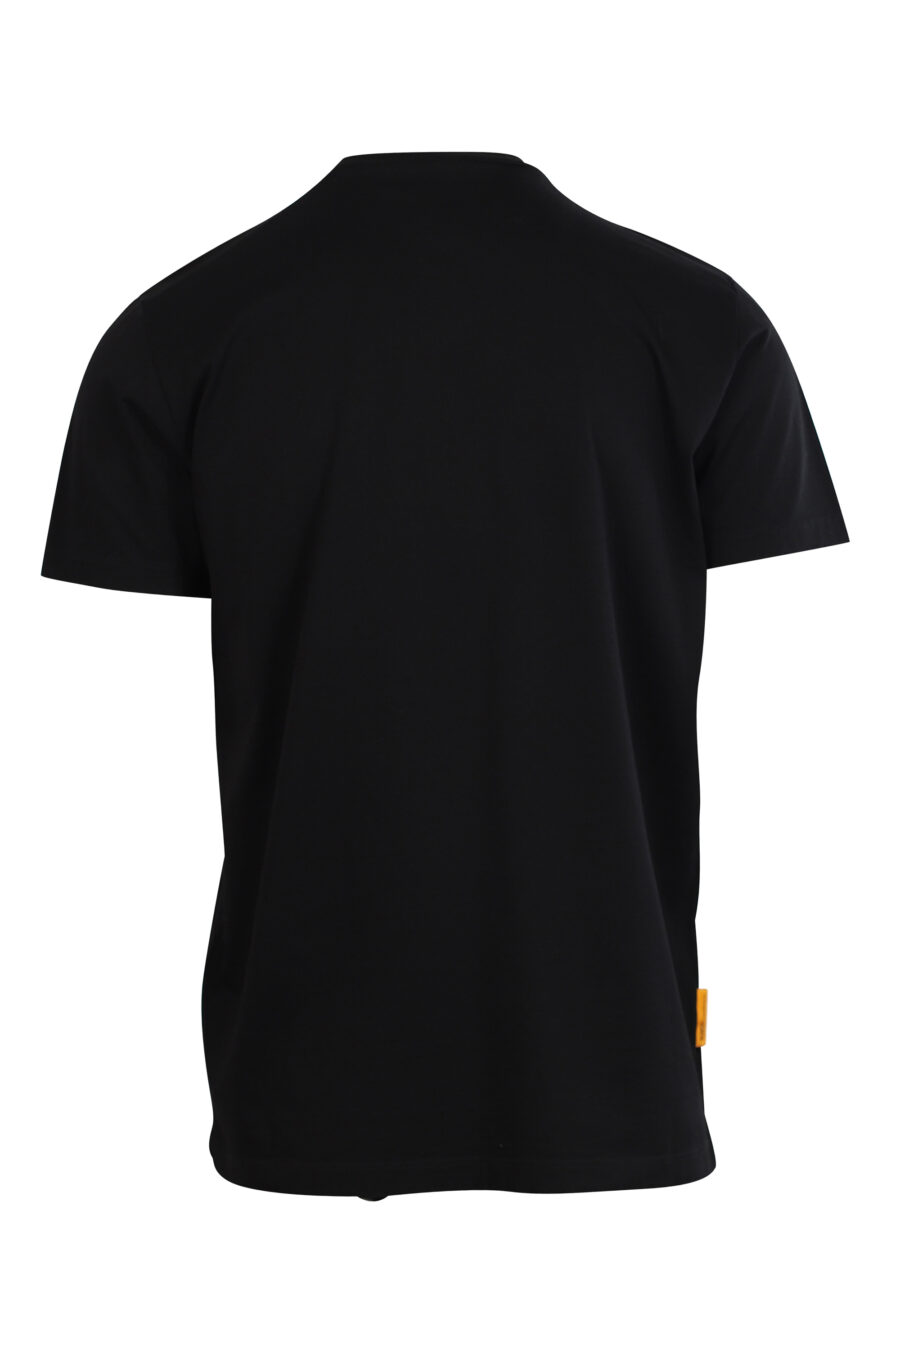 Black T-shirt with "pac-man" maxilogo - 8054148177485 2